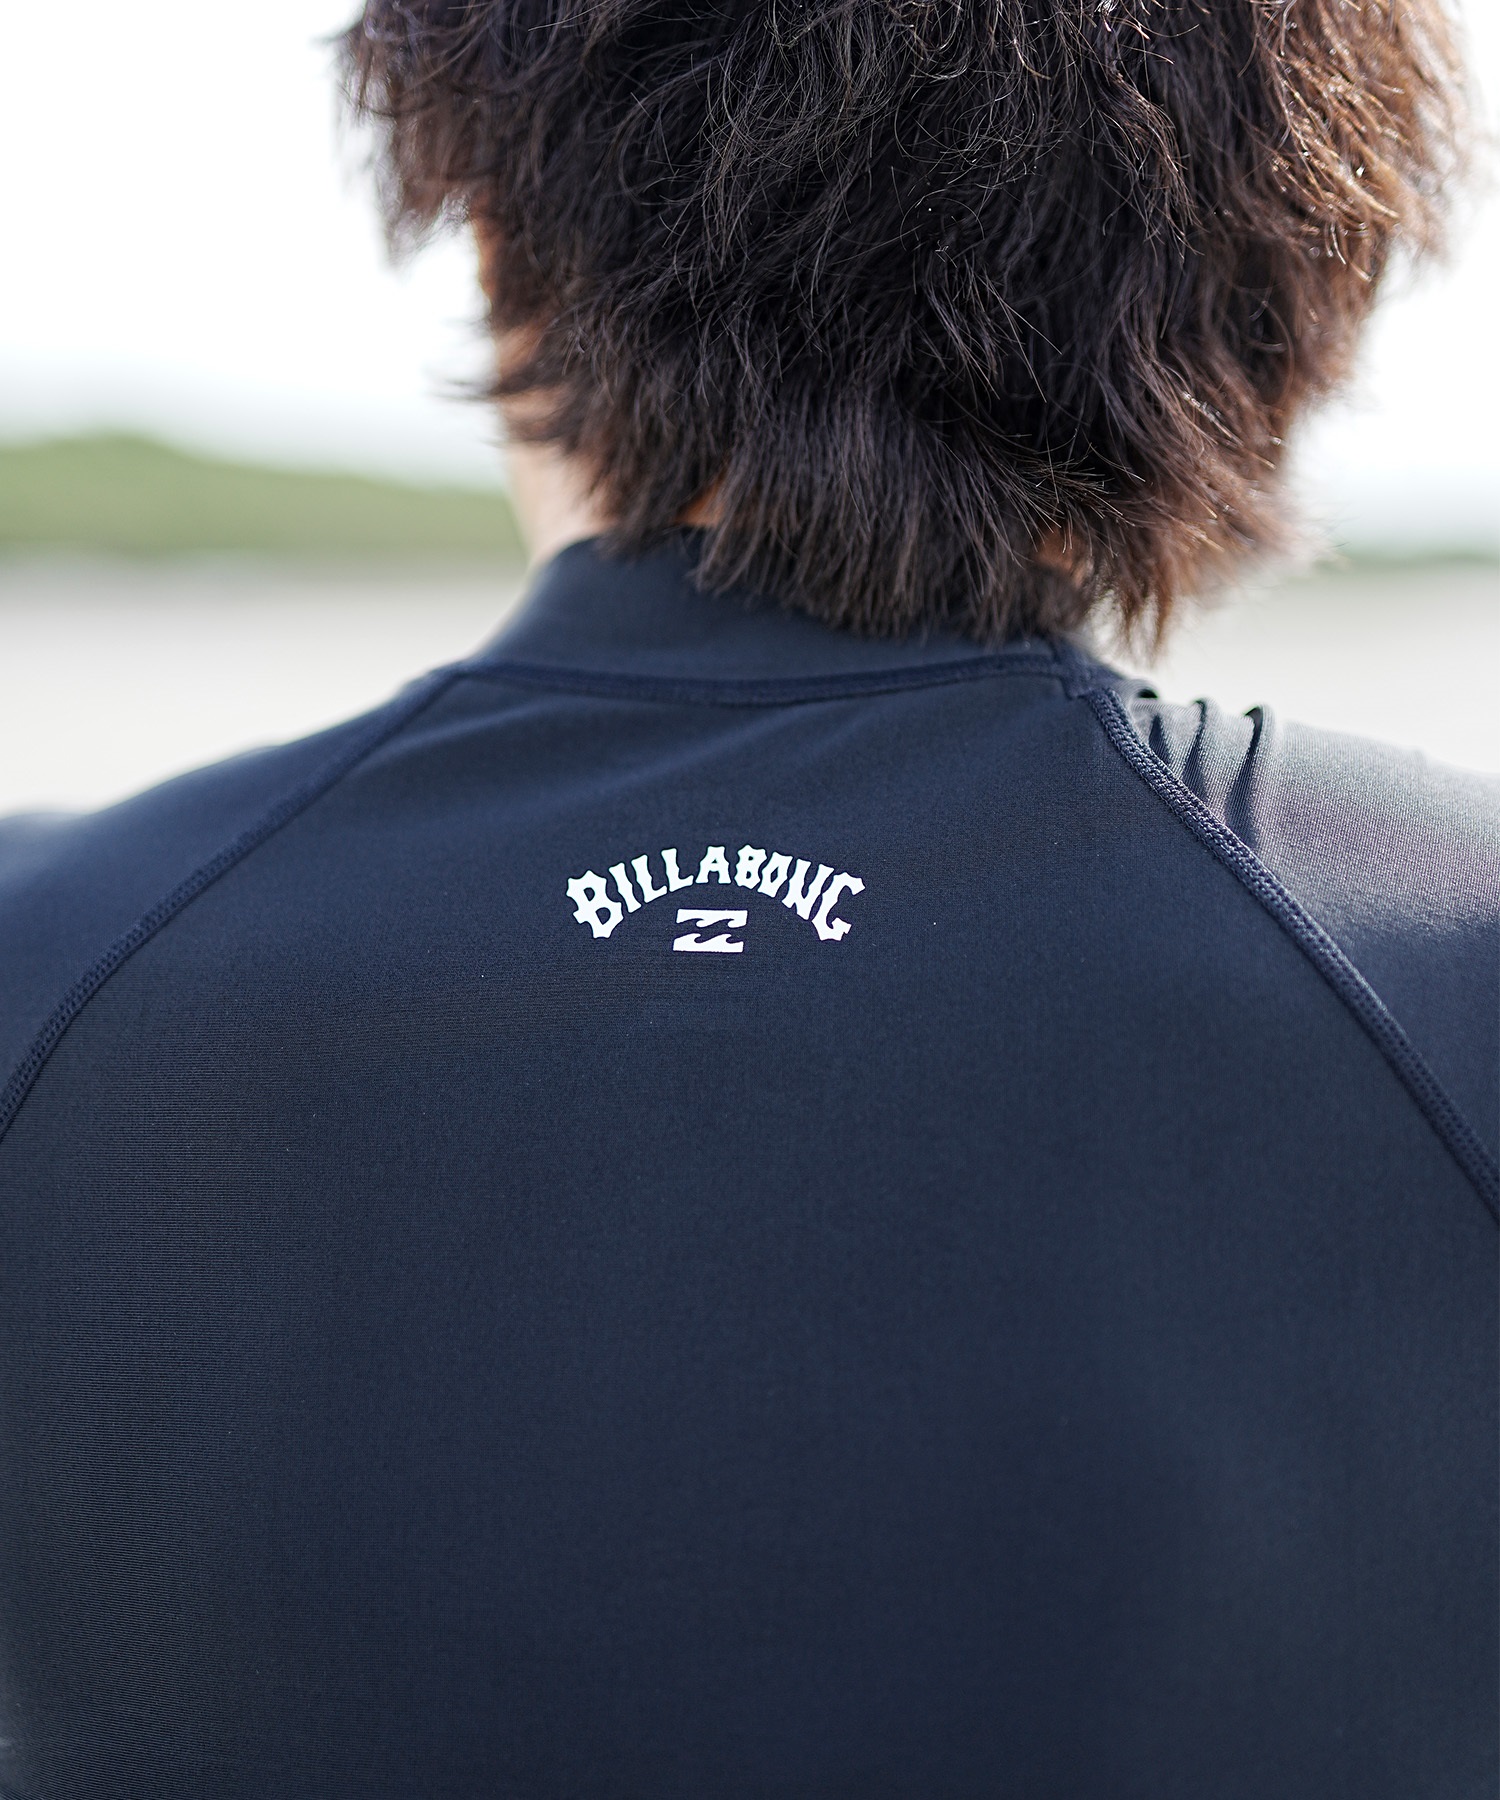 BILLABONG ビラボン HI NECK SS メンズ ラッシュガード Tシャツ 半袖 ハイネック UVカット BE011-850(BLK-M)